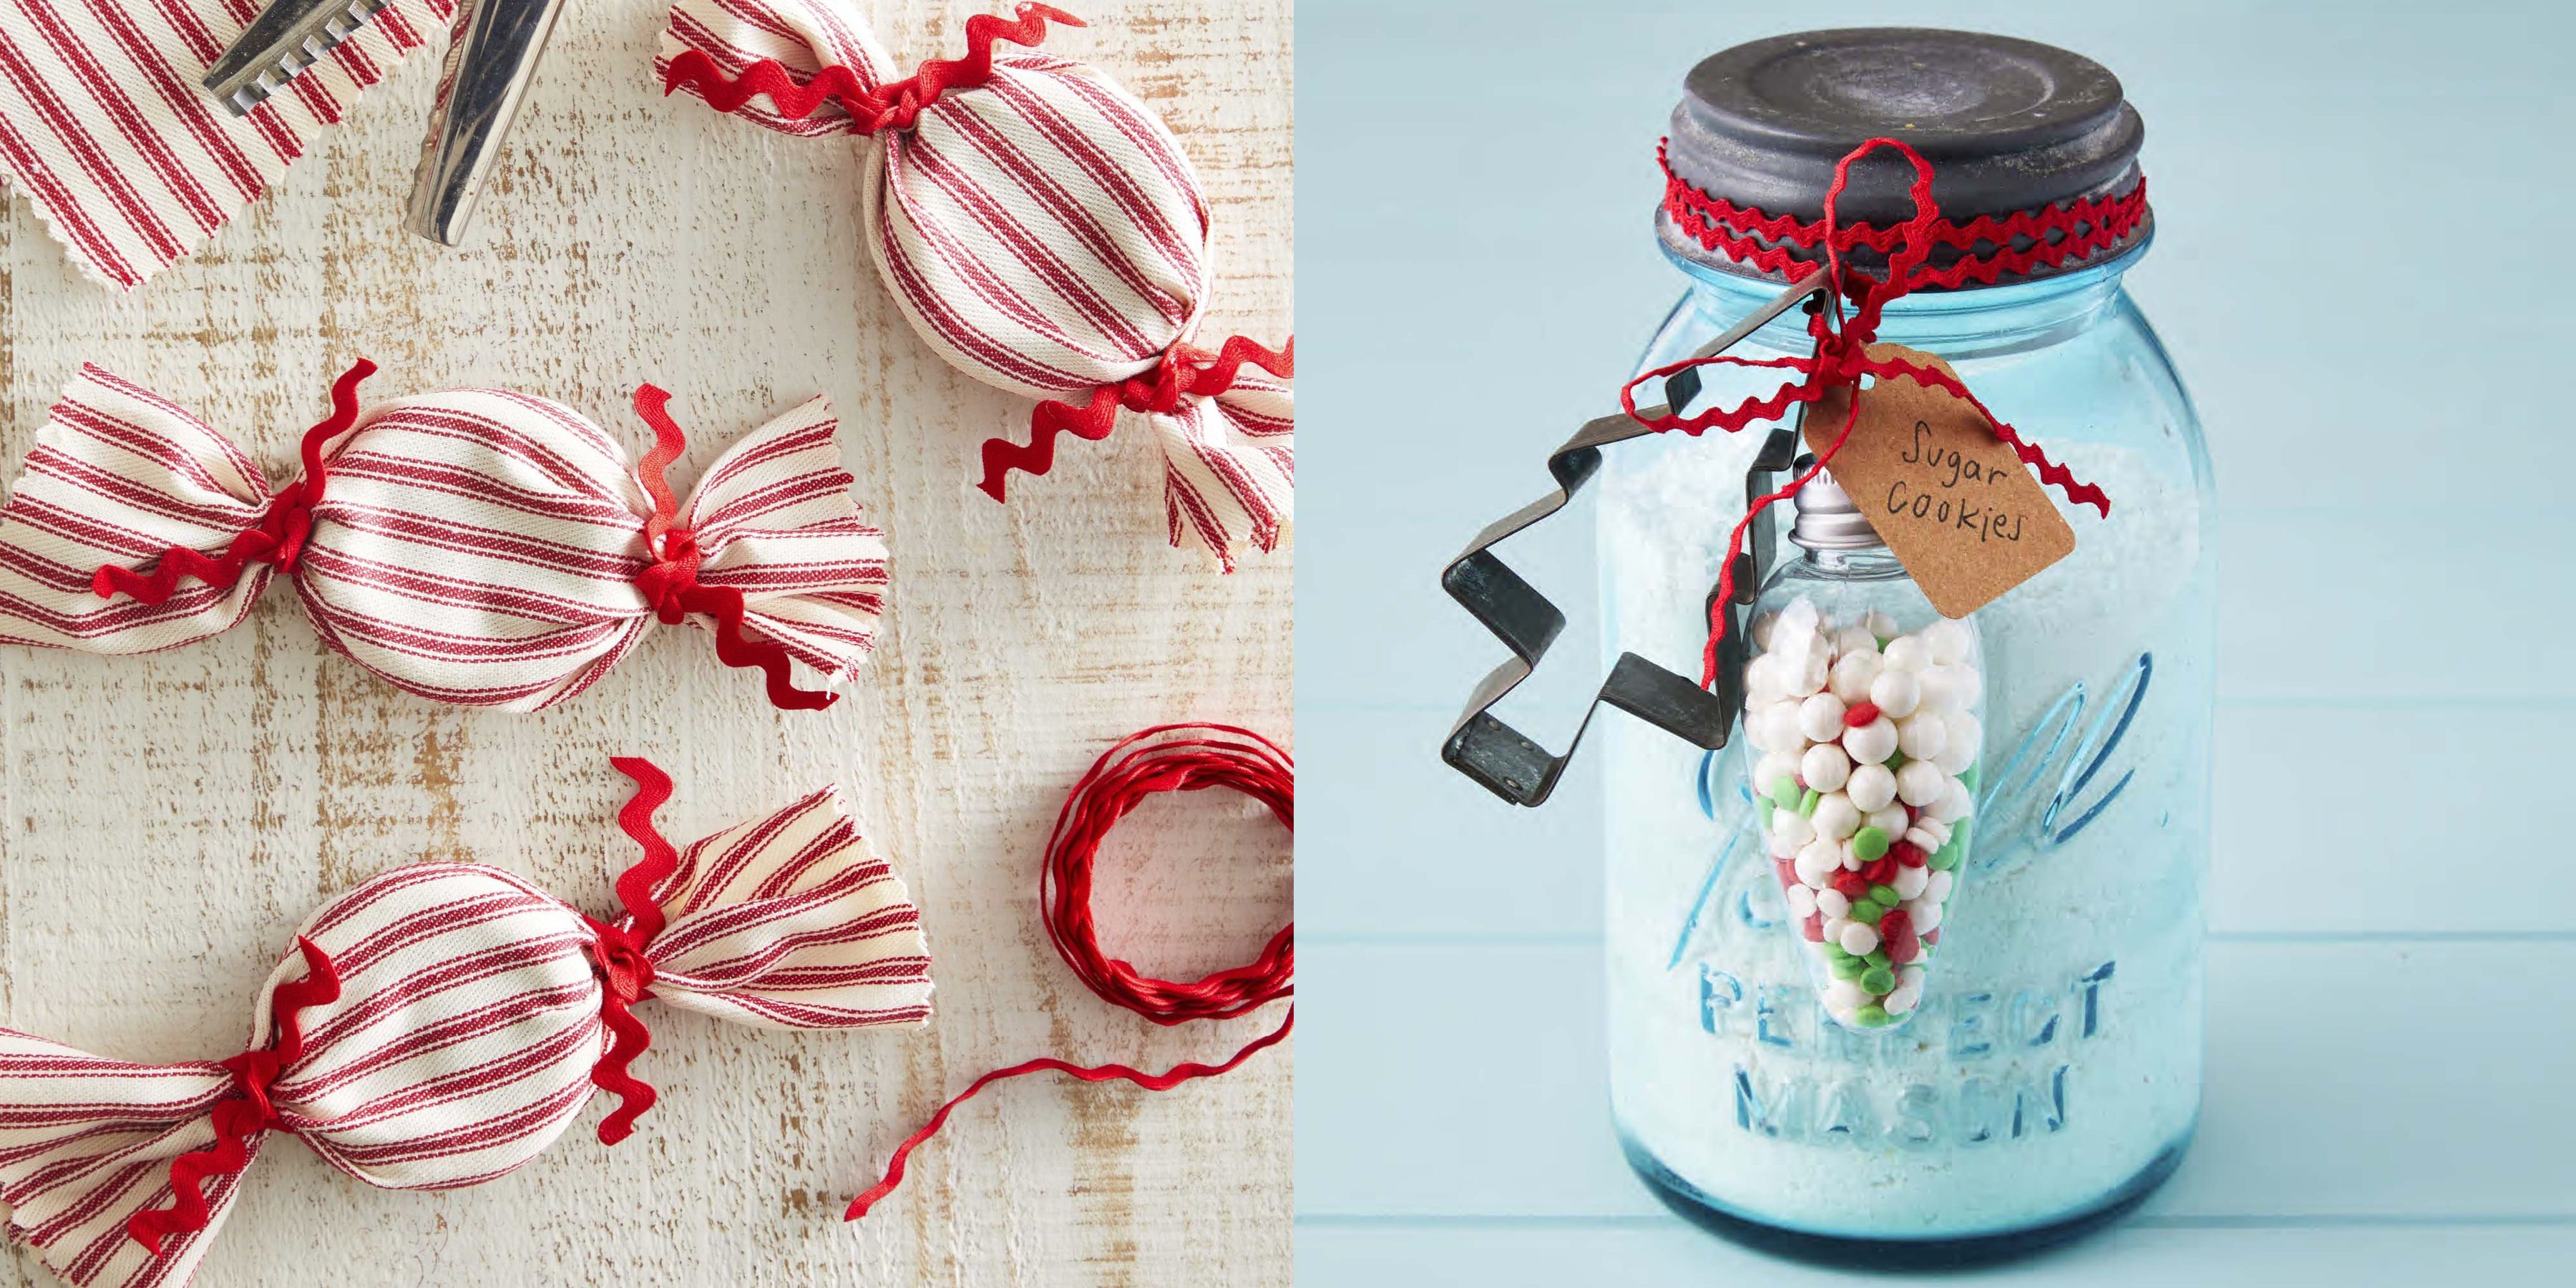 Easy Homemade Christmas Gift Ideas | ~ Texas Homesteader ~